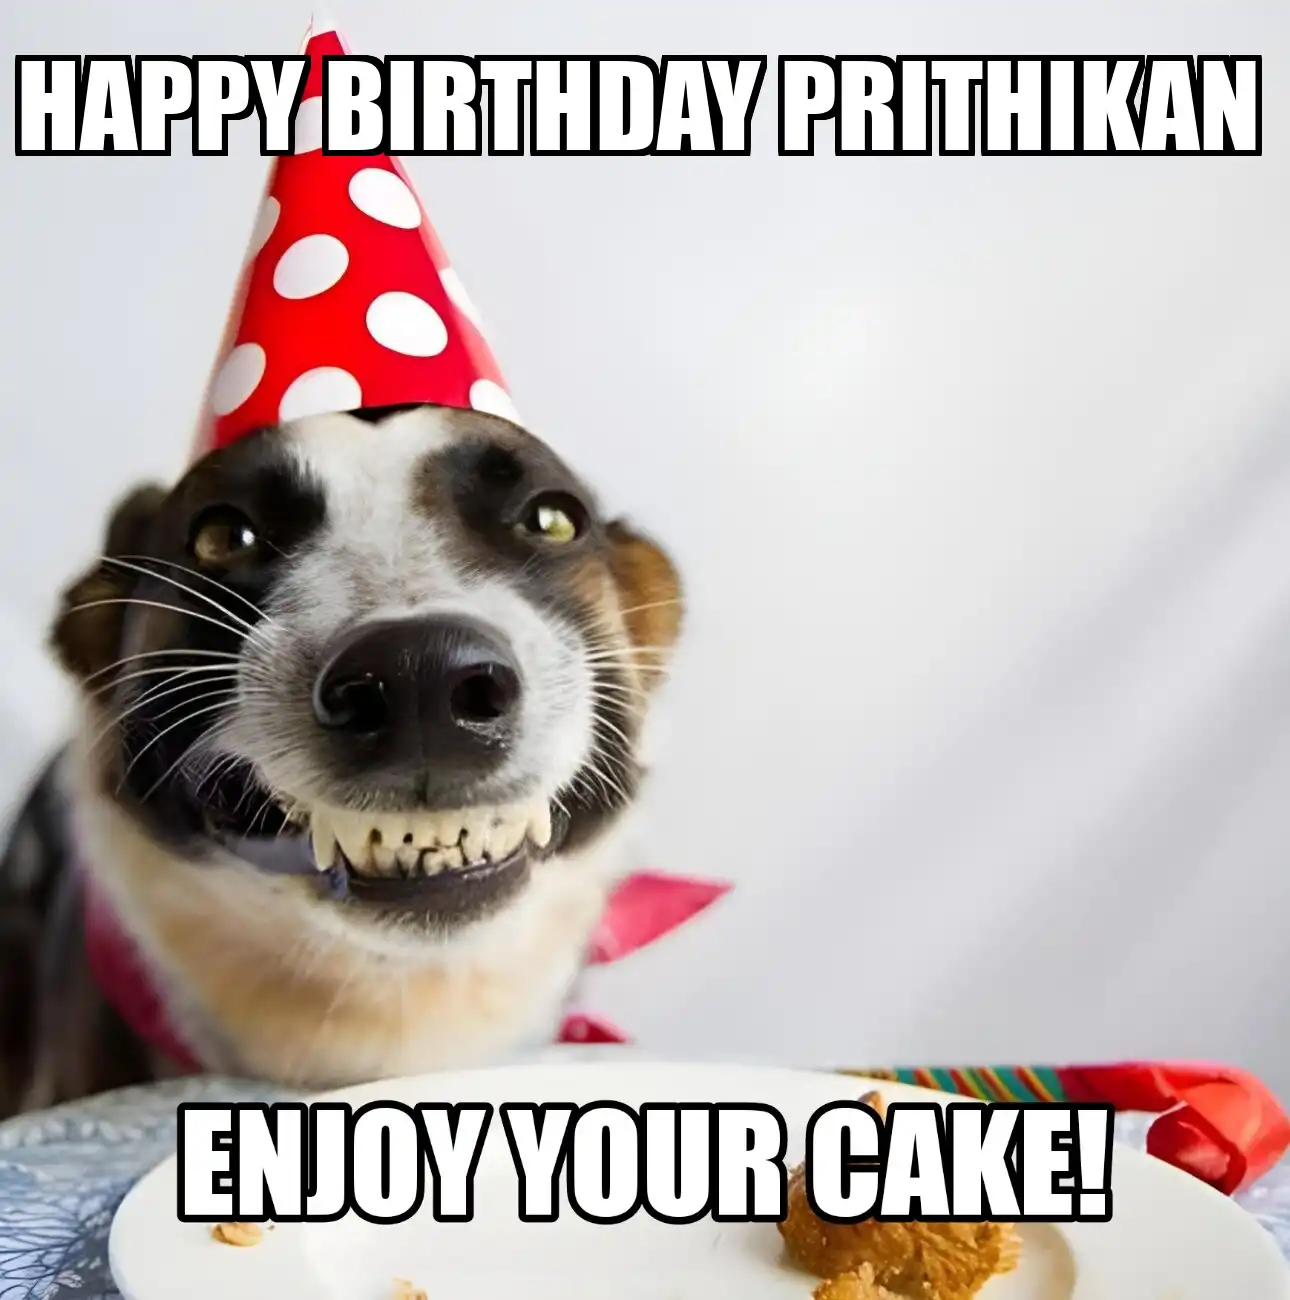 Happy Birthday Prithikan Enjoy Your Cake Dog Meme